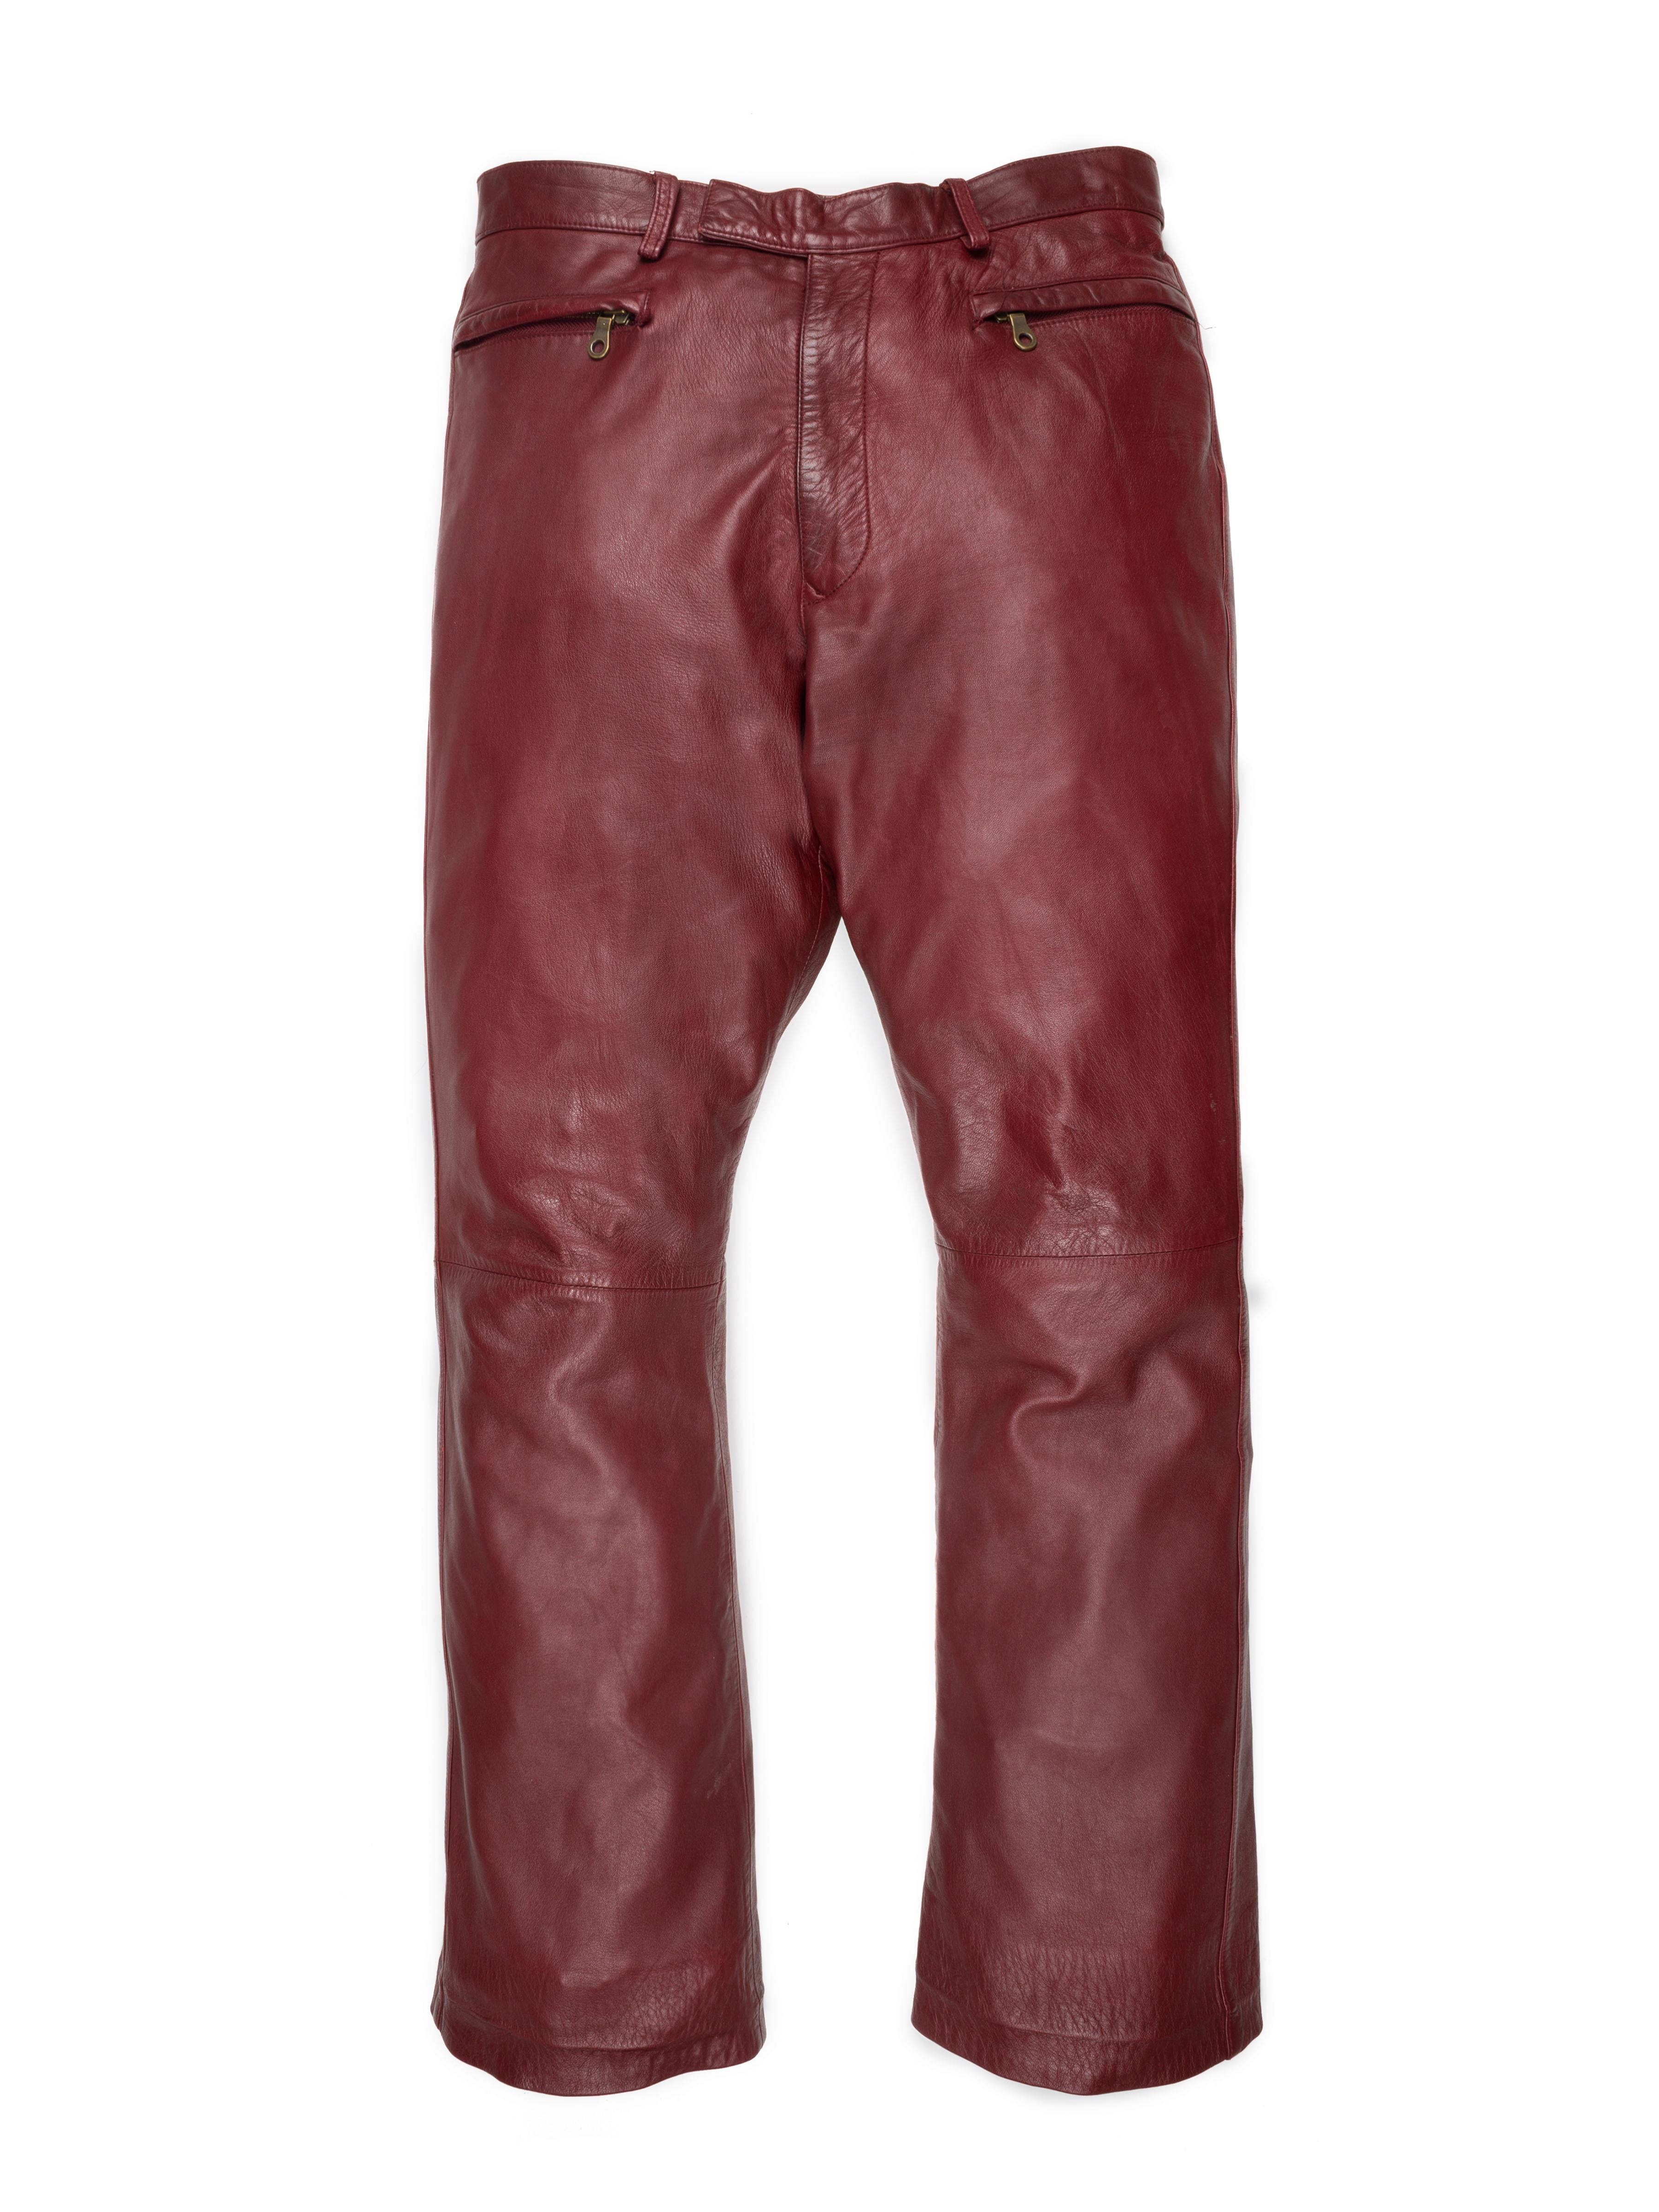 jean paul gaultier leather pants